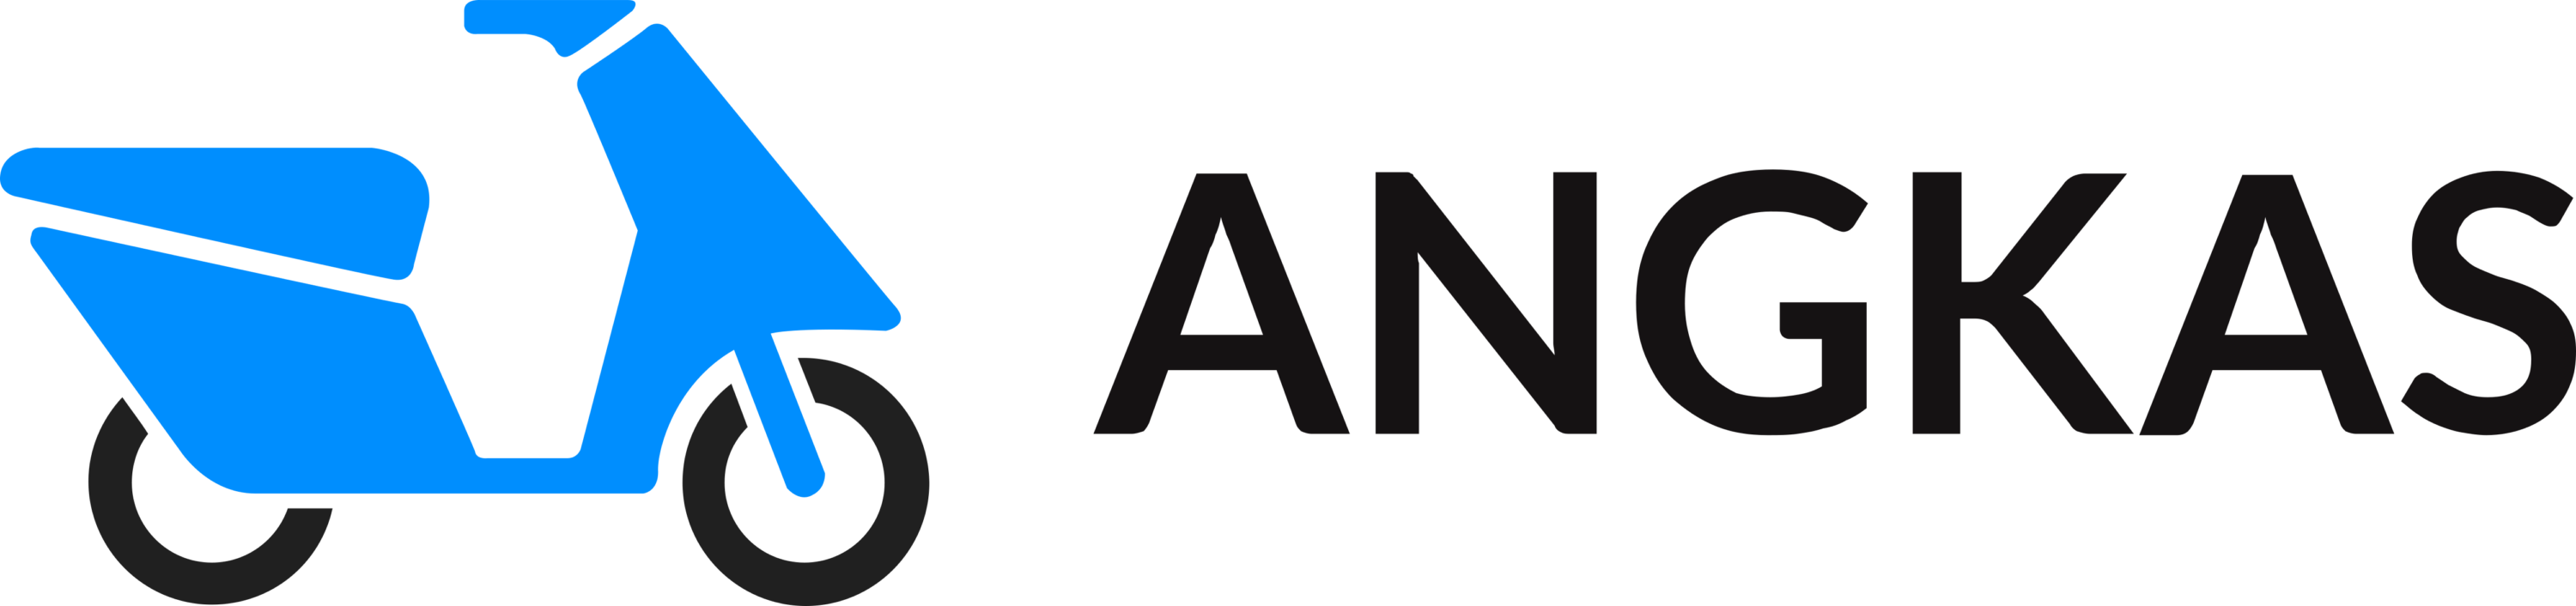 Angkas Logo